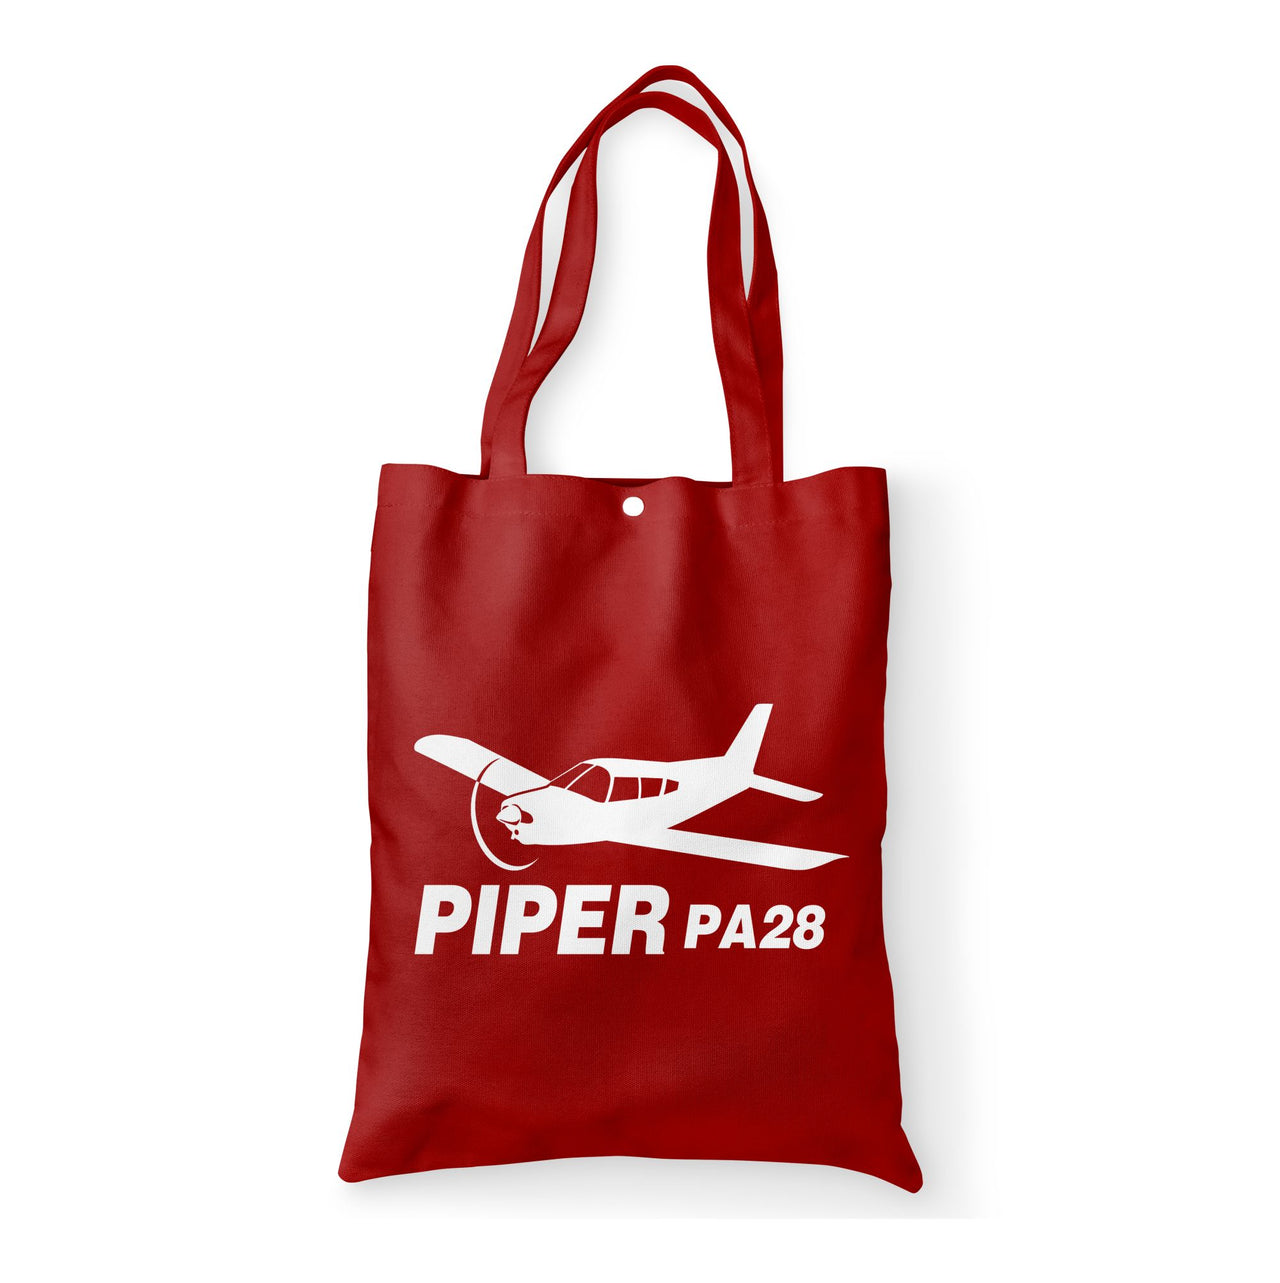 The Piper PA28 Designed Tote Bags